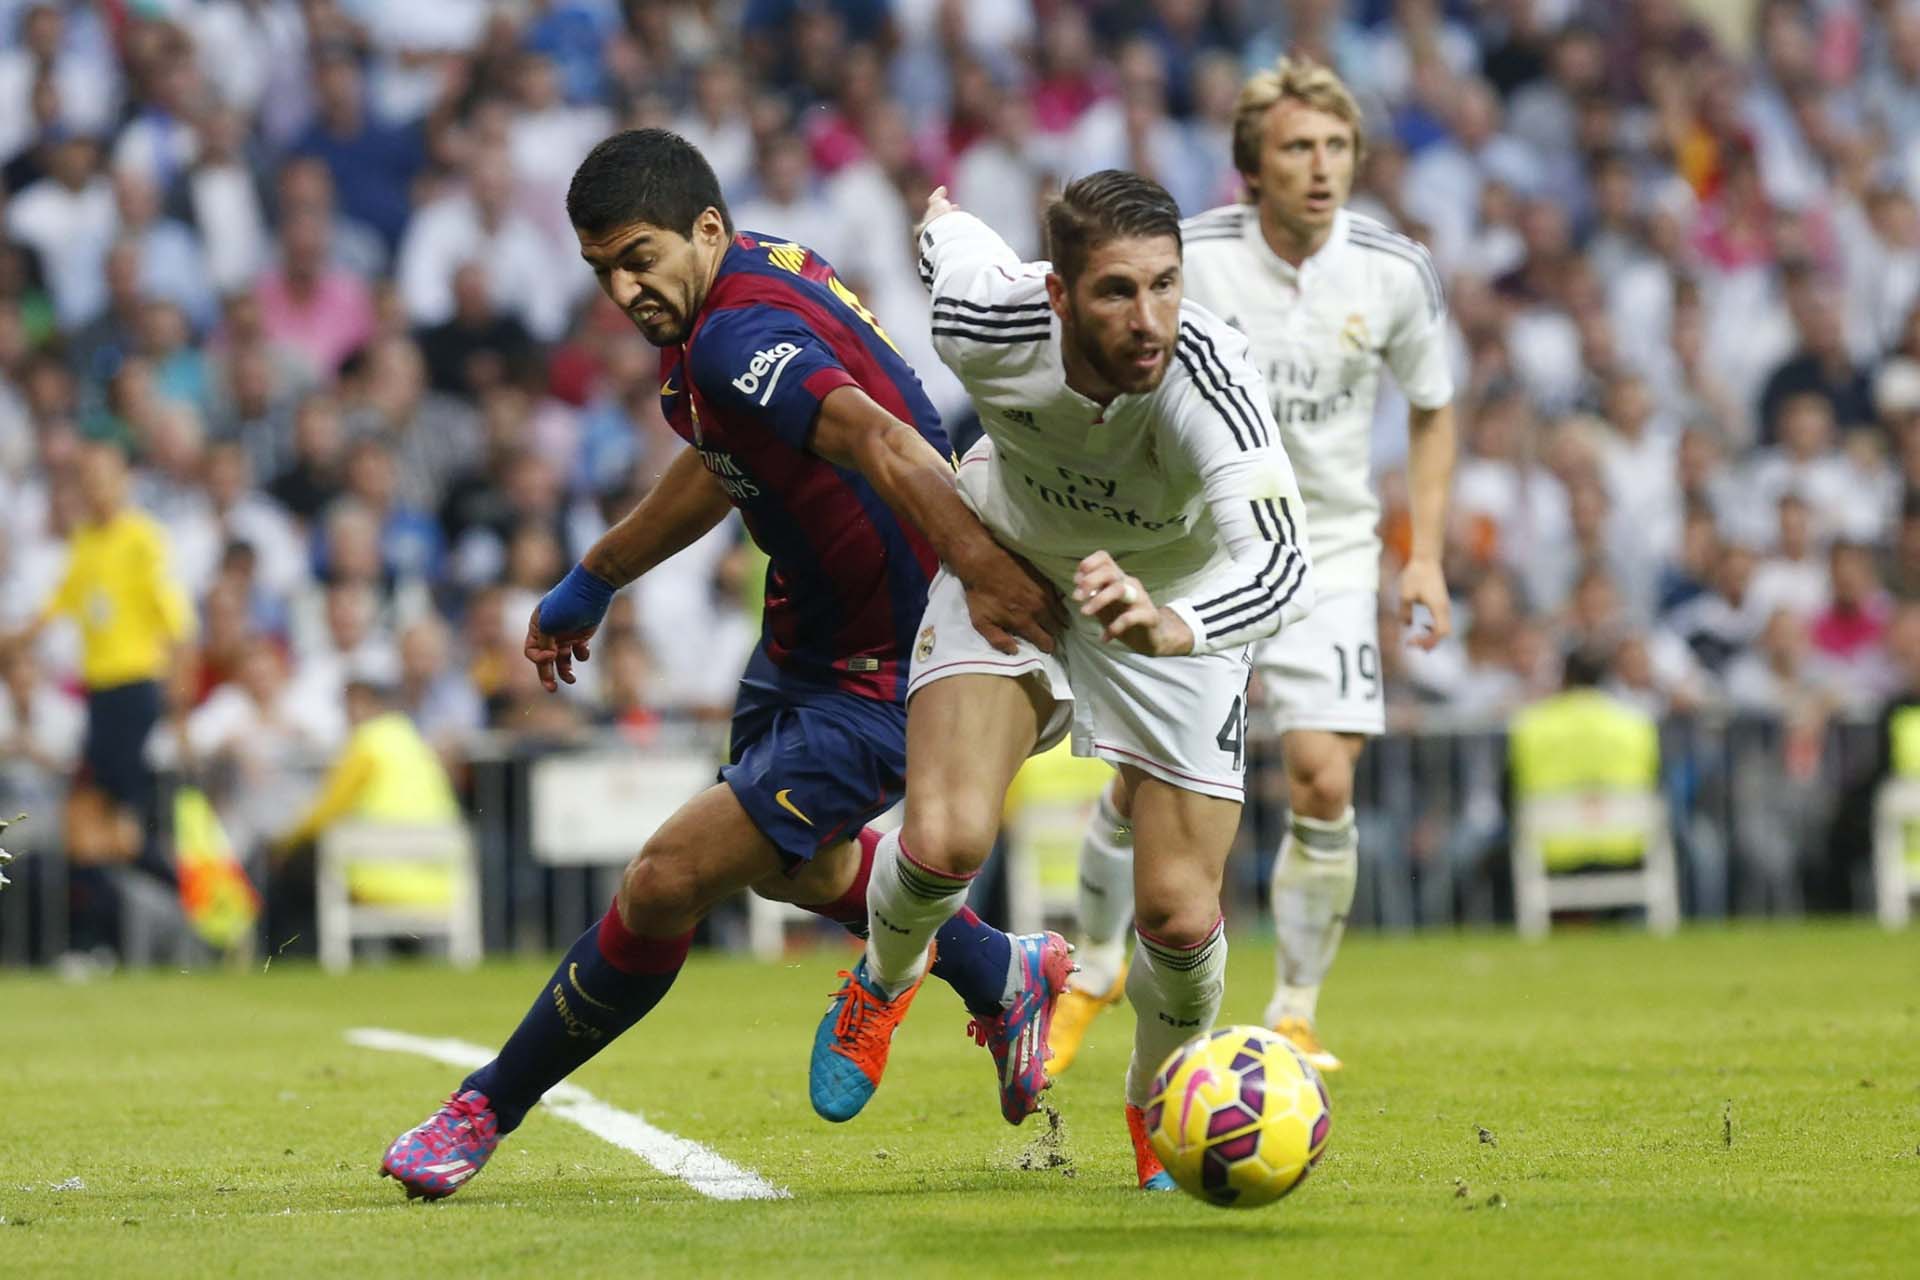 Real Madrid falls 1-2 to rival Barcelona at “El Classico”